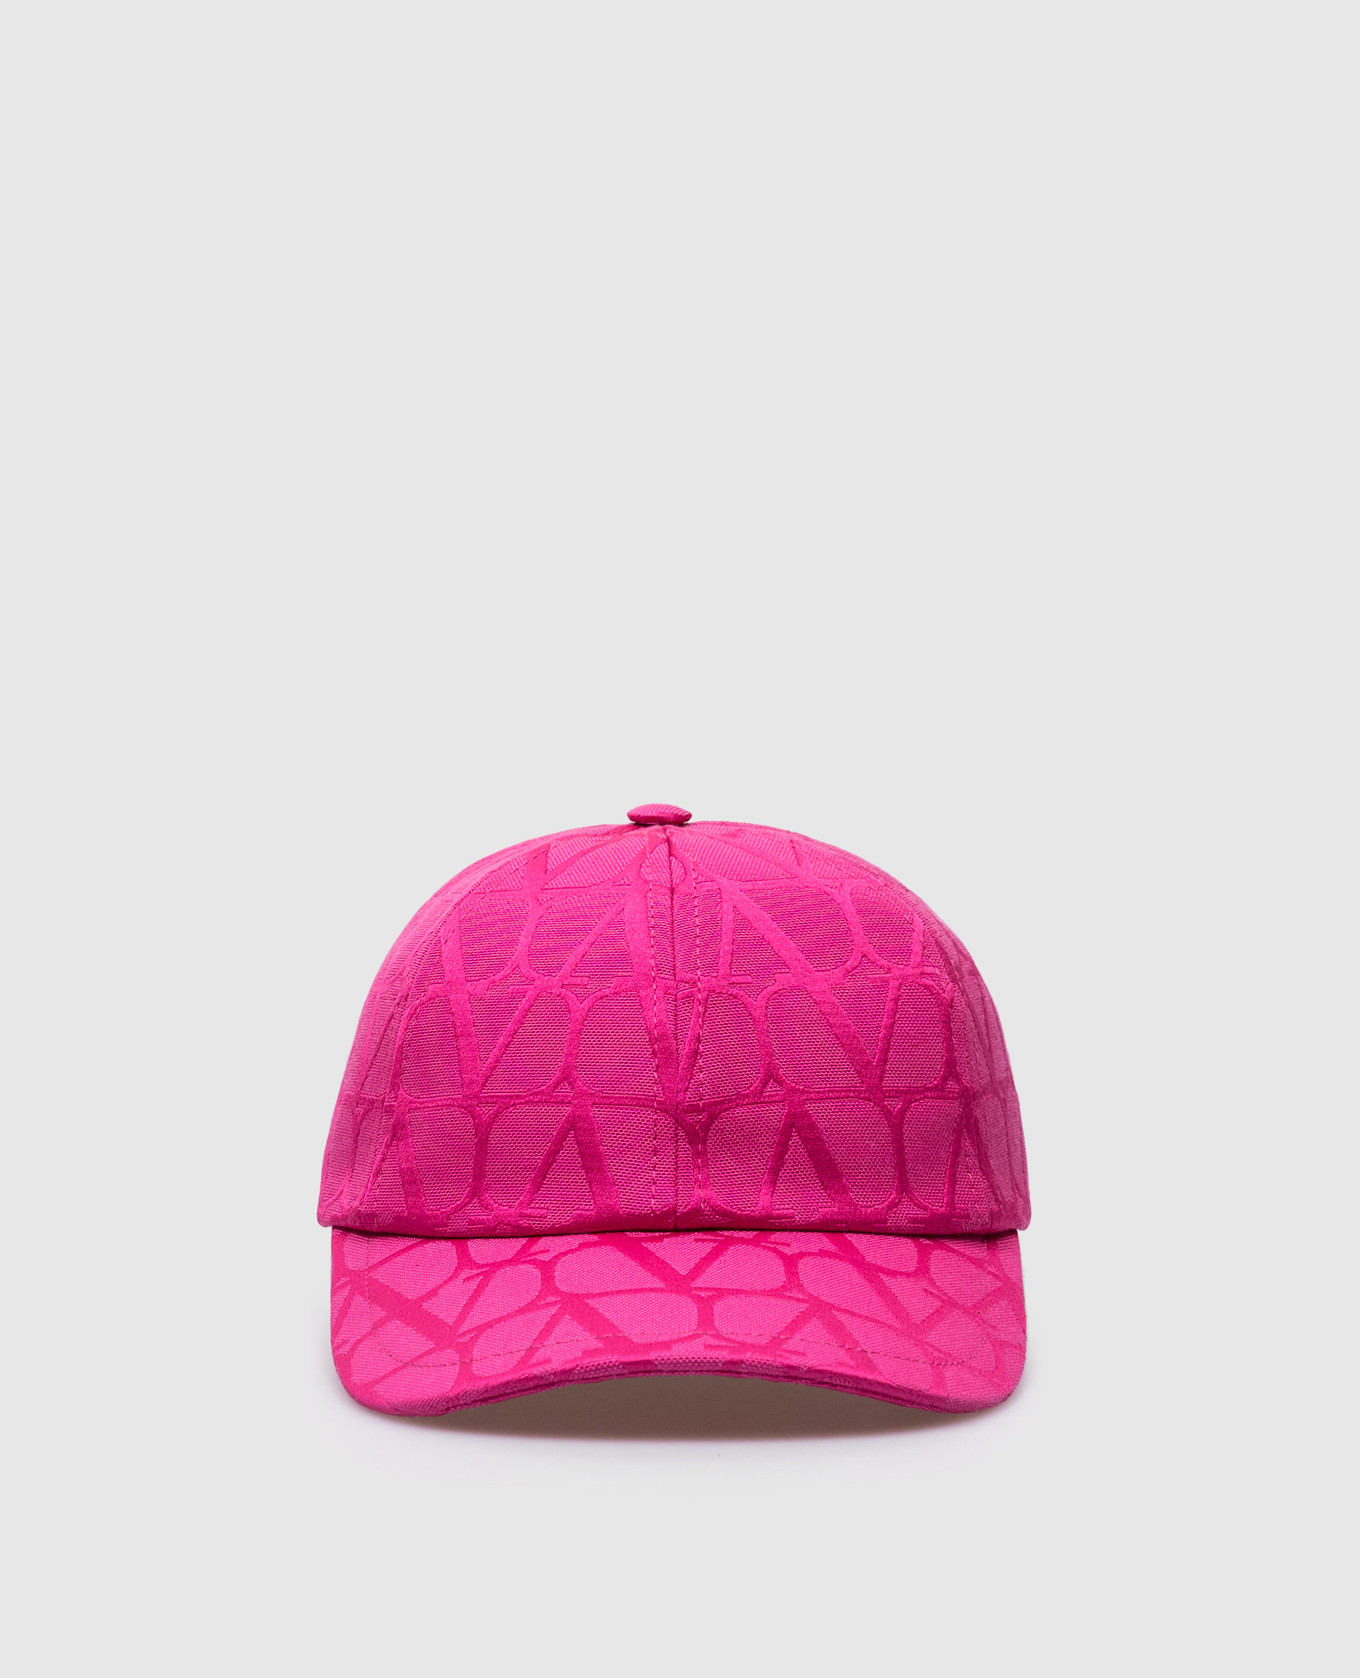 Pink cap with VLogo pattern